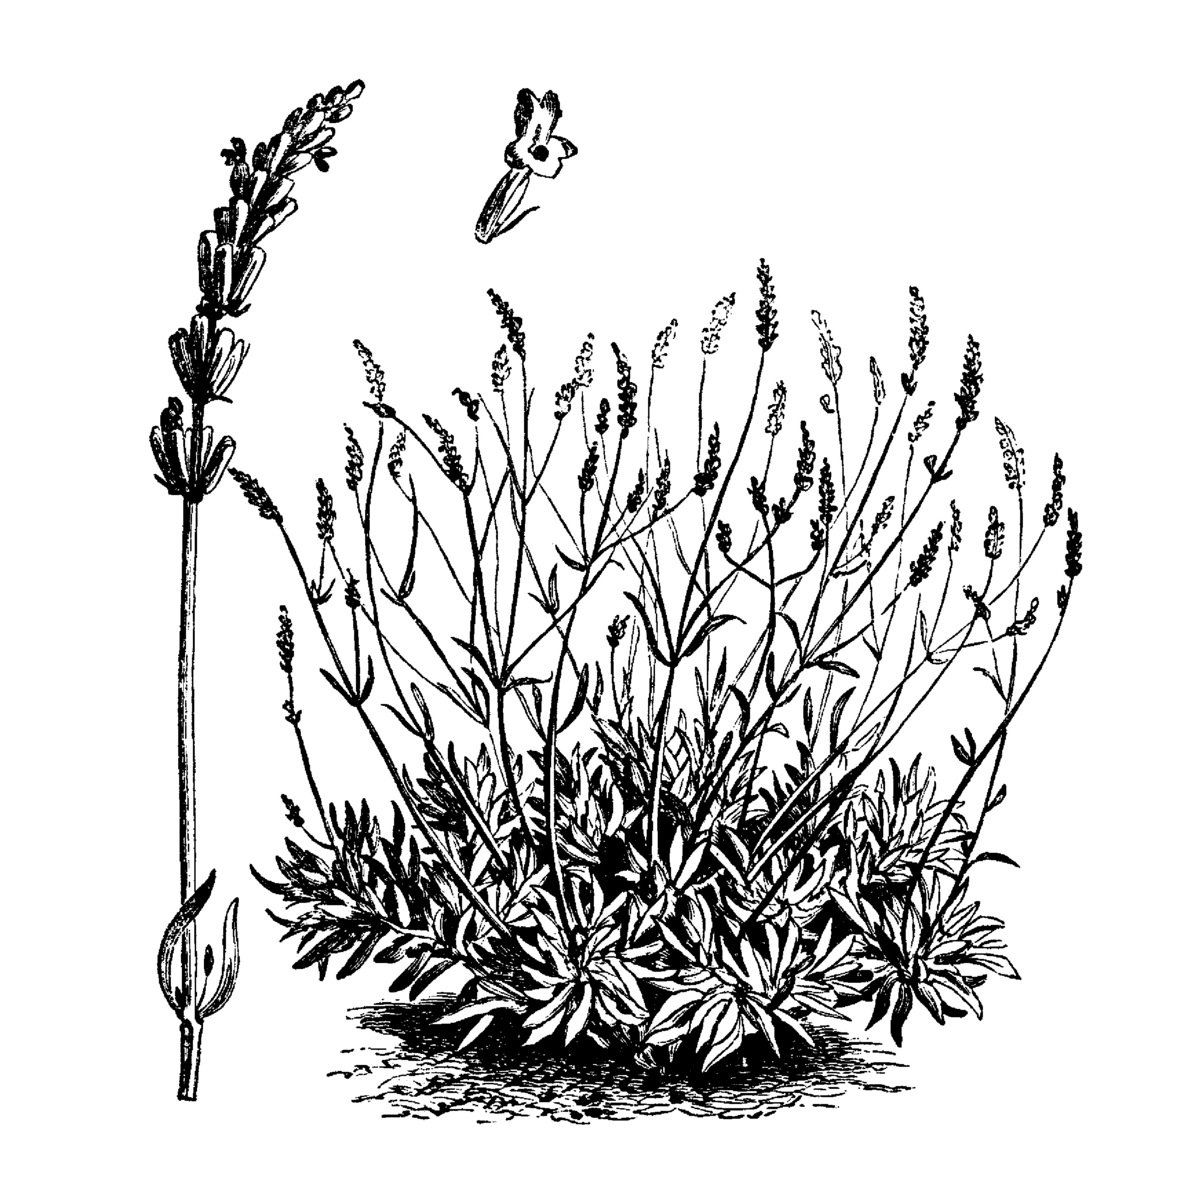 illustratie lavendel - lavendelstruik snoeien